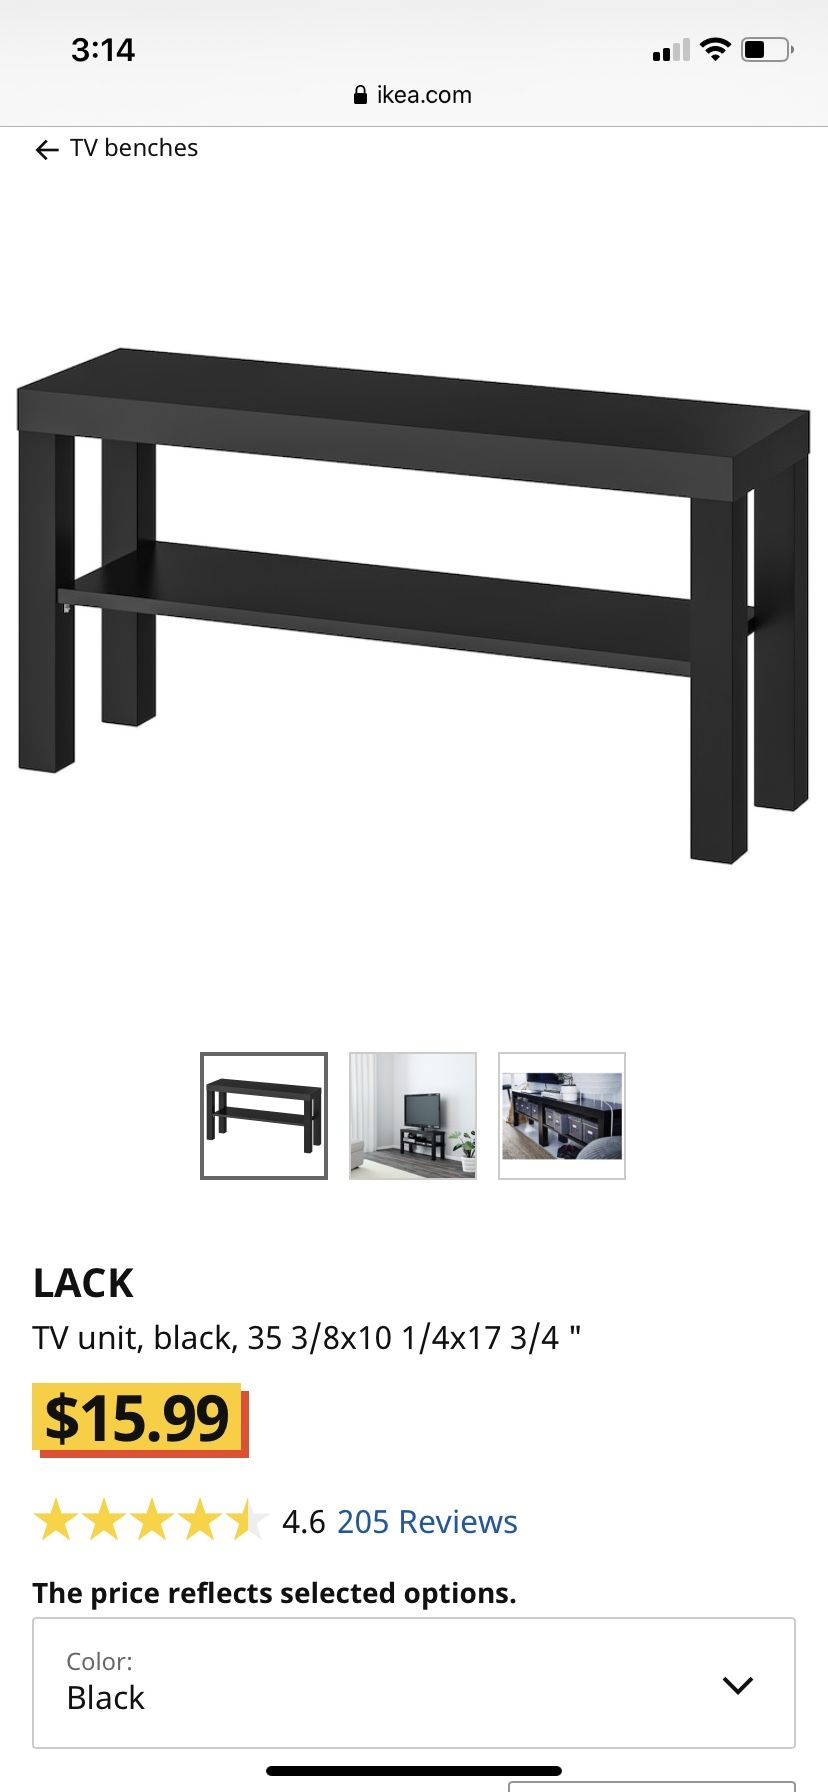 Ikea lack tv stand